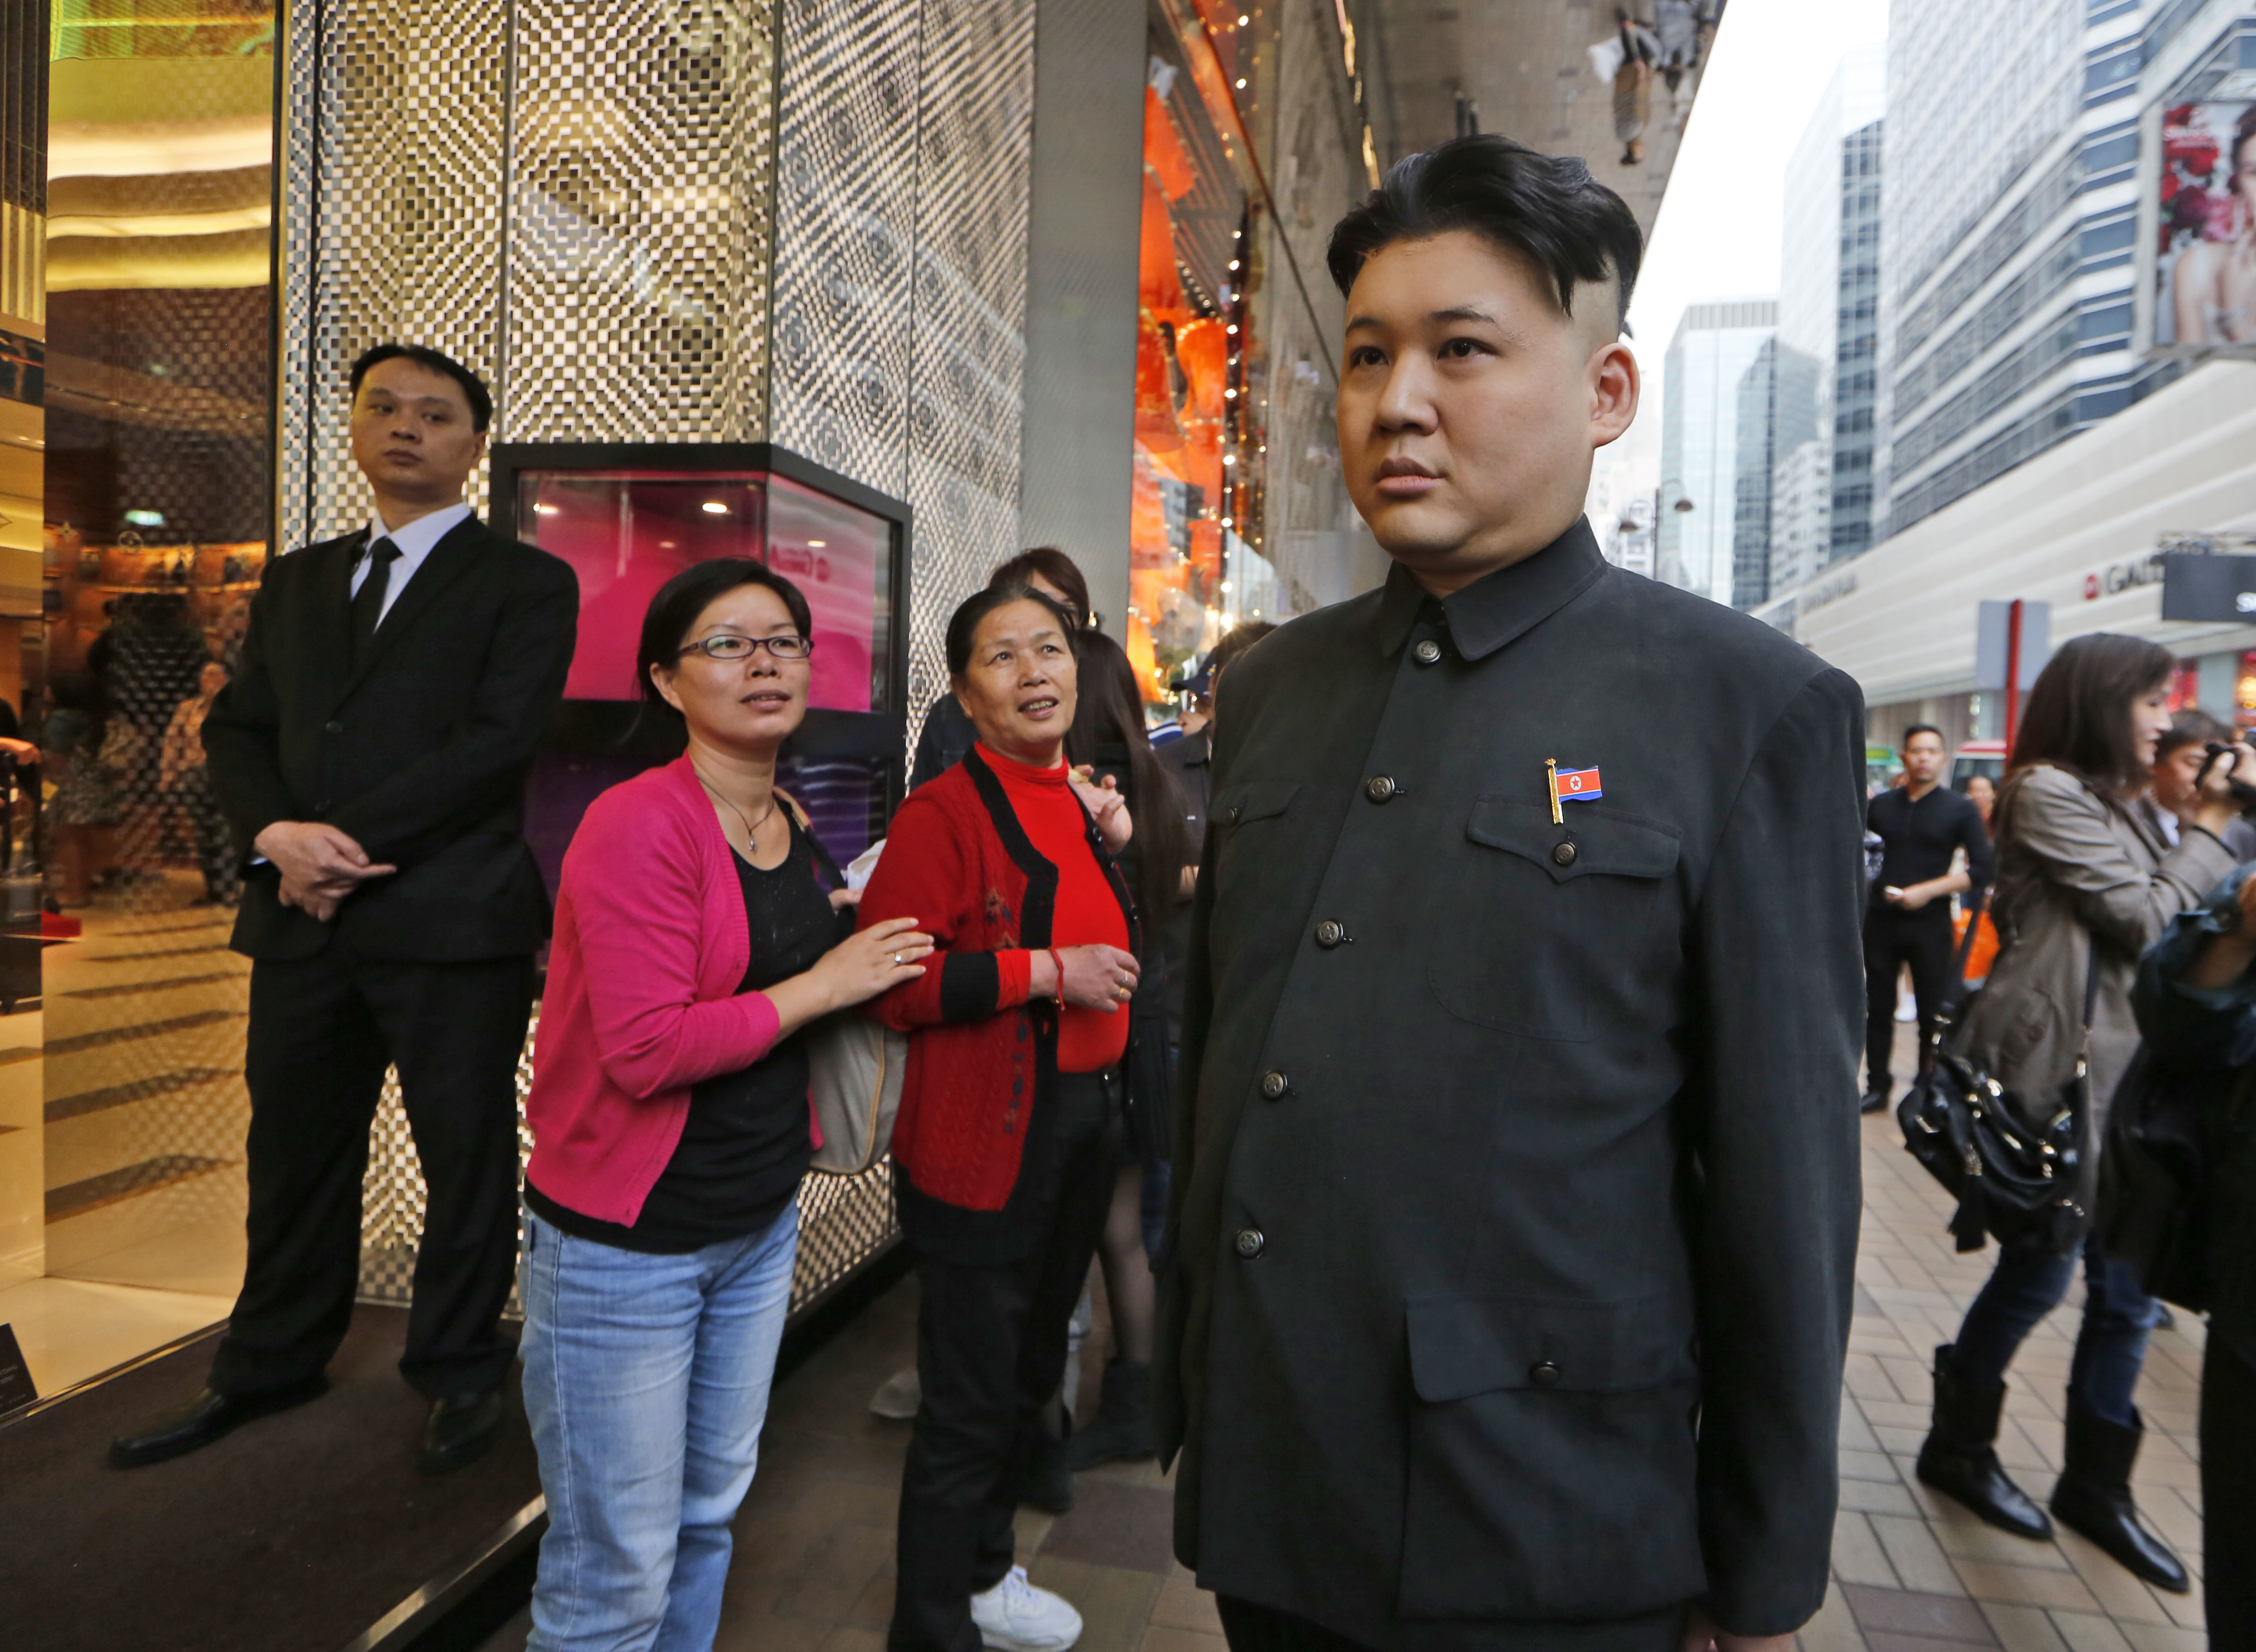 Kim Jong Un Doppelganger Makes Waves As Burger Salesman In Tel Aviv